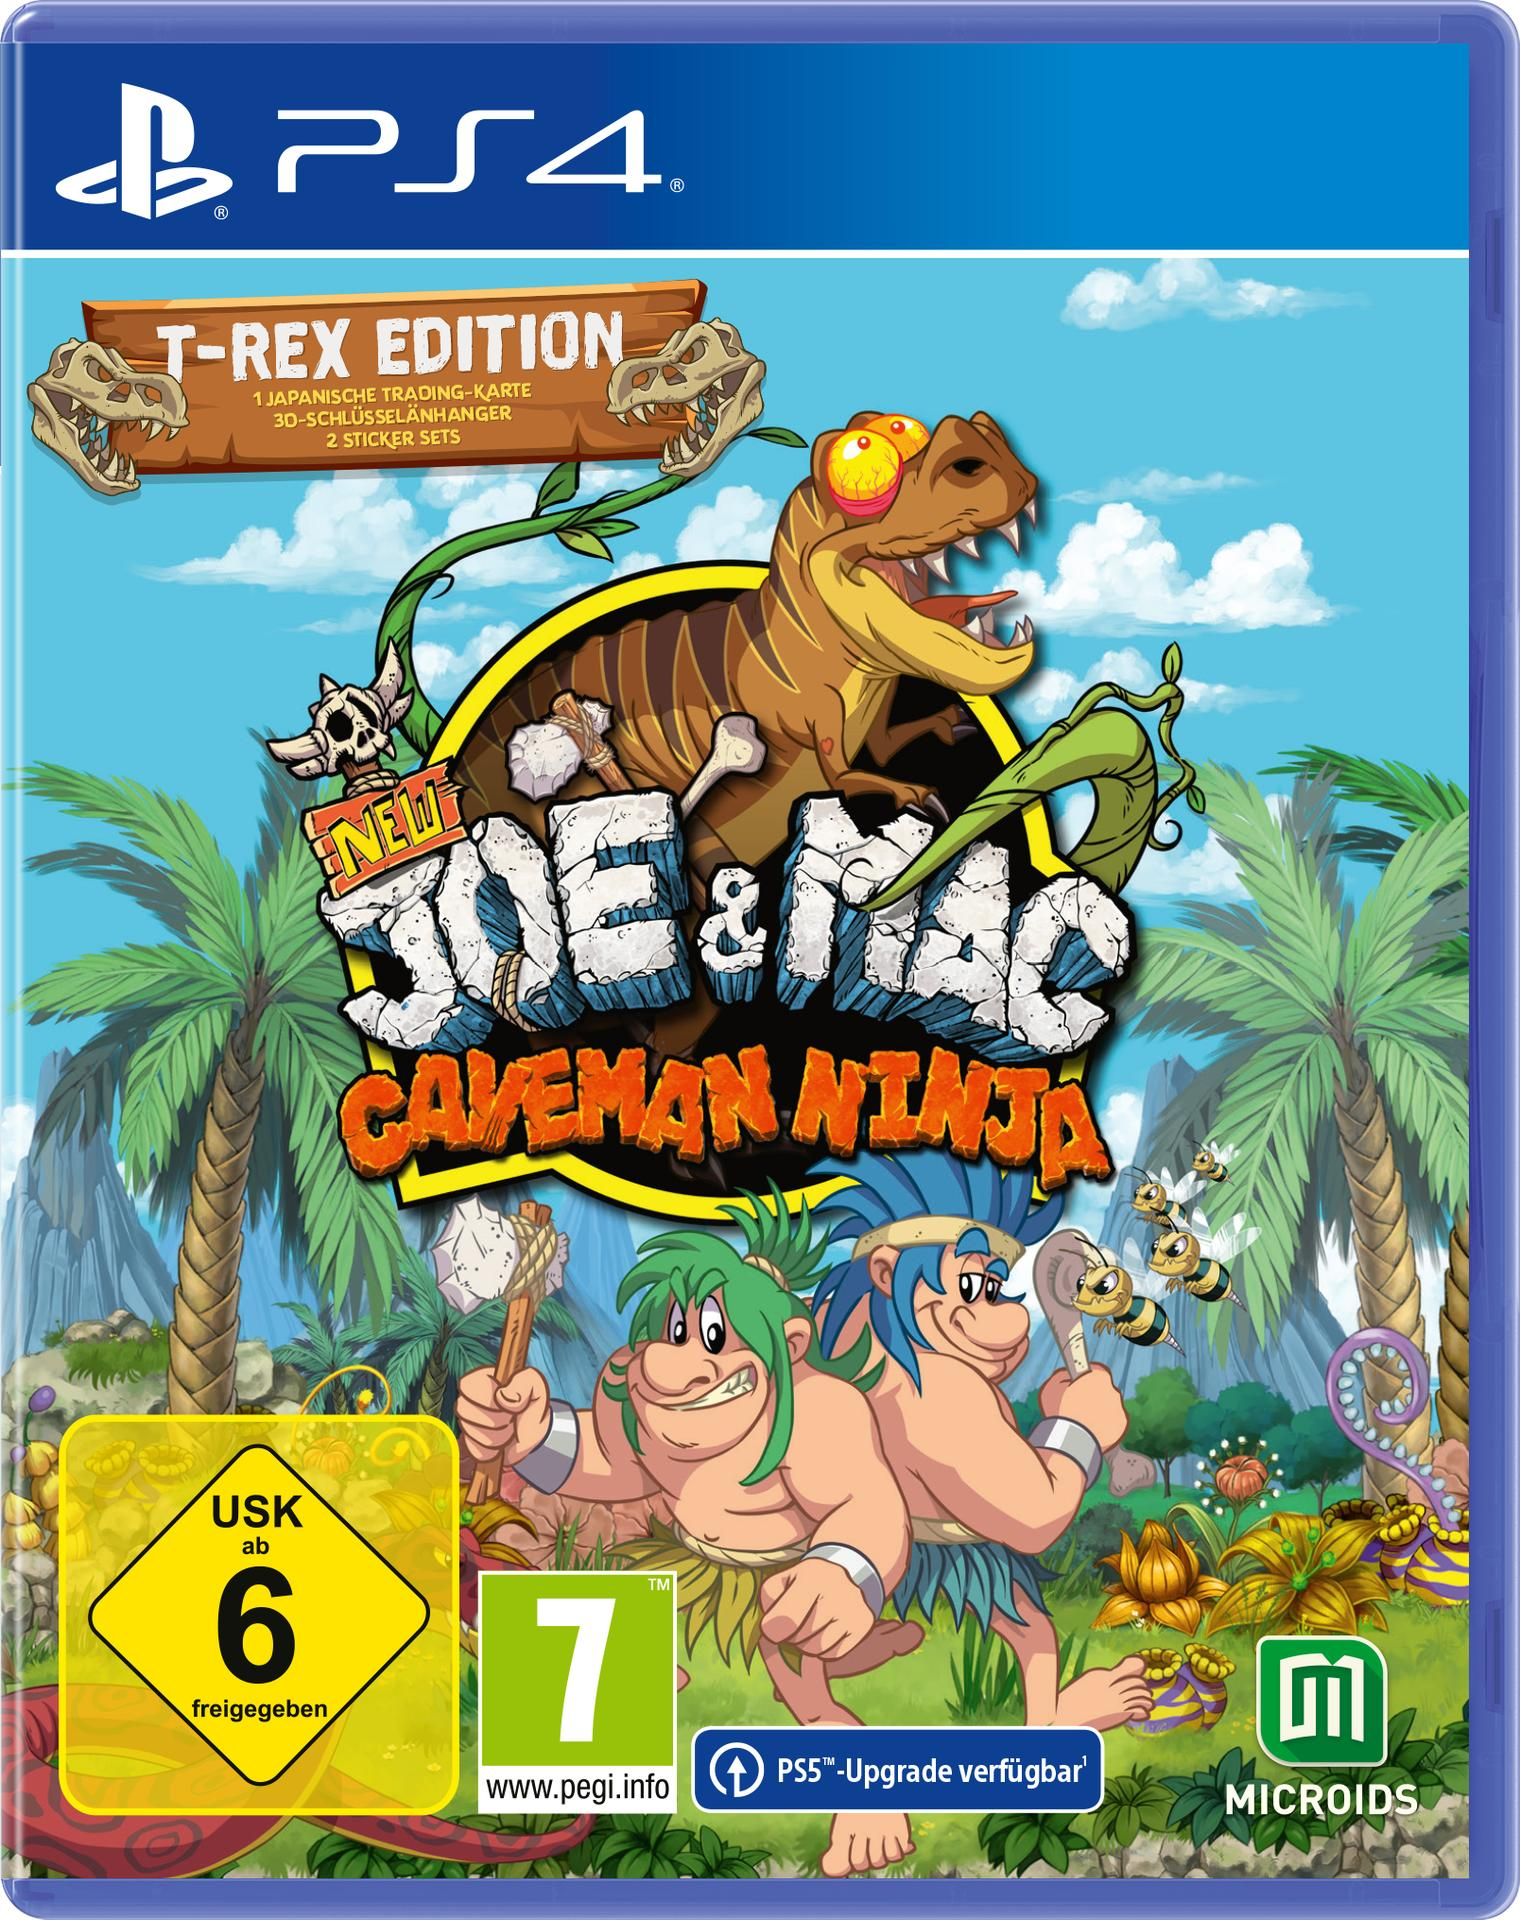 - [PlayStation T-Rex Ninja & Joe Edition Mac: - Caveman 4] New